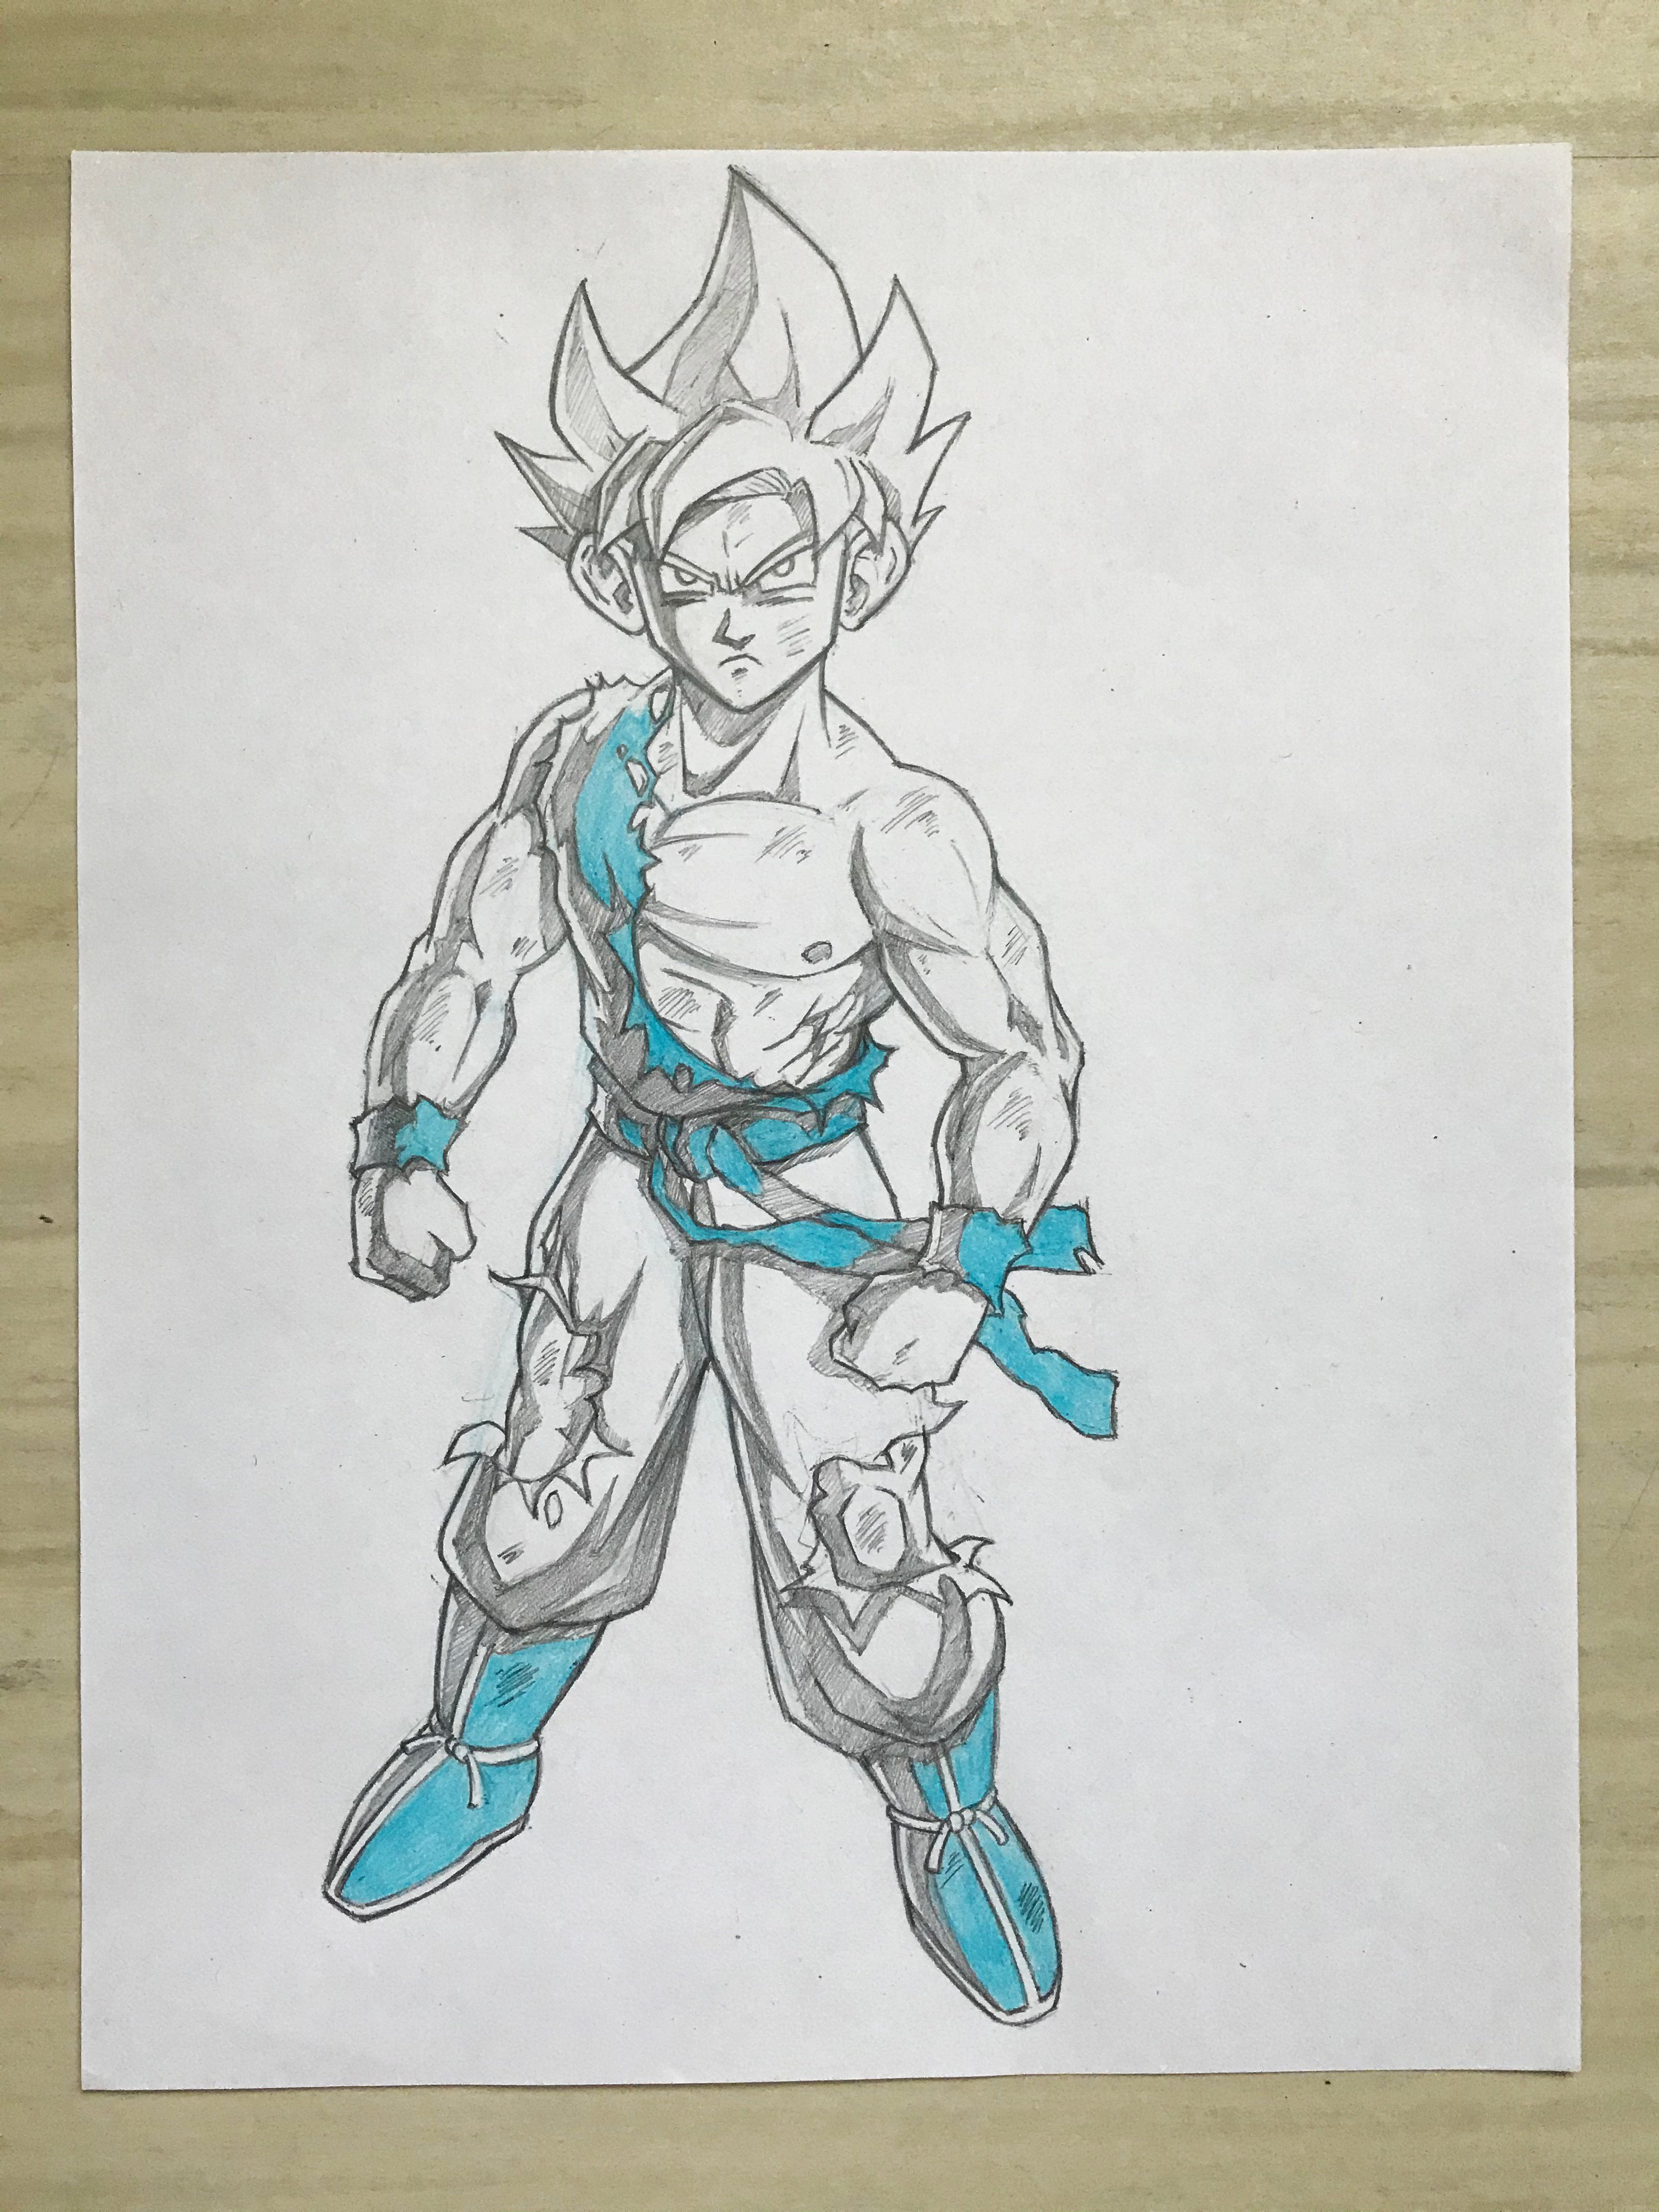 توییتر \ Ron Tang در توییتر: «Throwing Goku back to the original Frieza  saga. When there was 1 Super Saiyan hair colour #rcytangart #art#TBT  #drawing #pencil #blackandwhite #outline #linework #portrait #fanart  #dragonball #